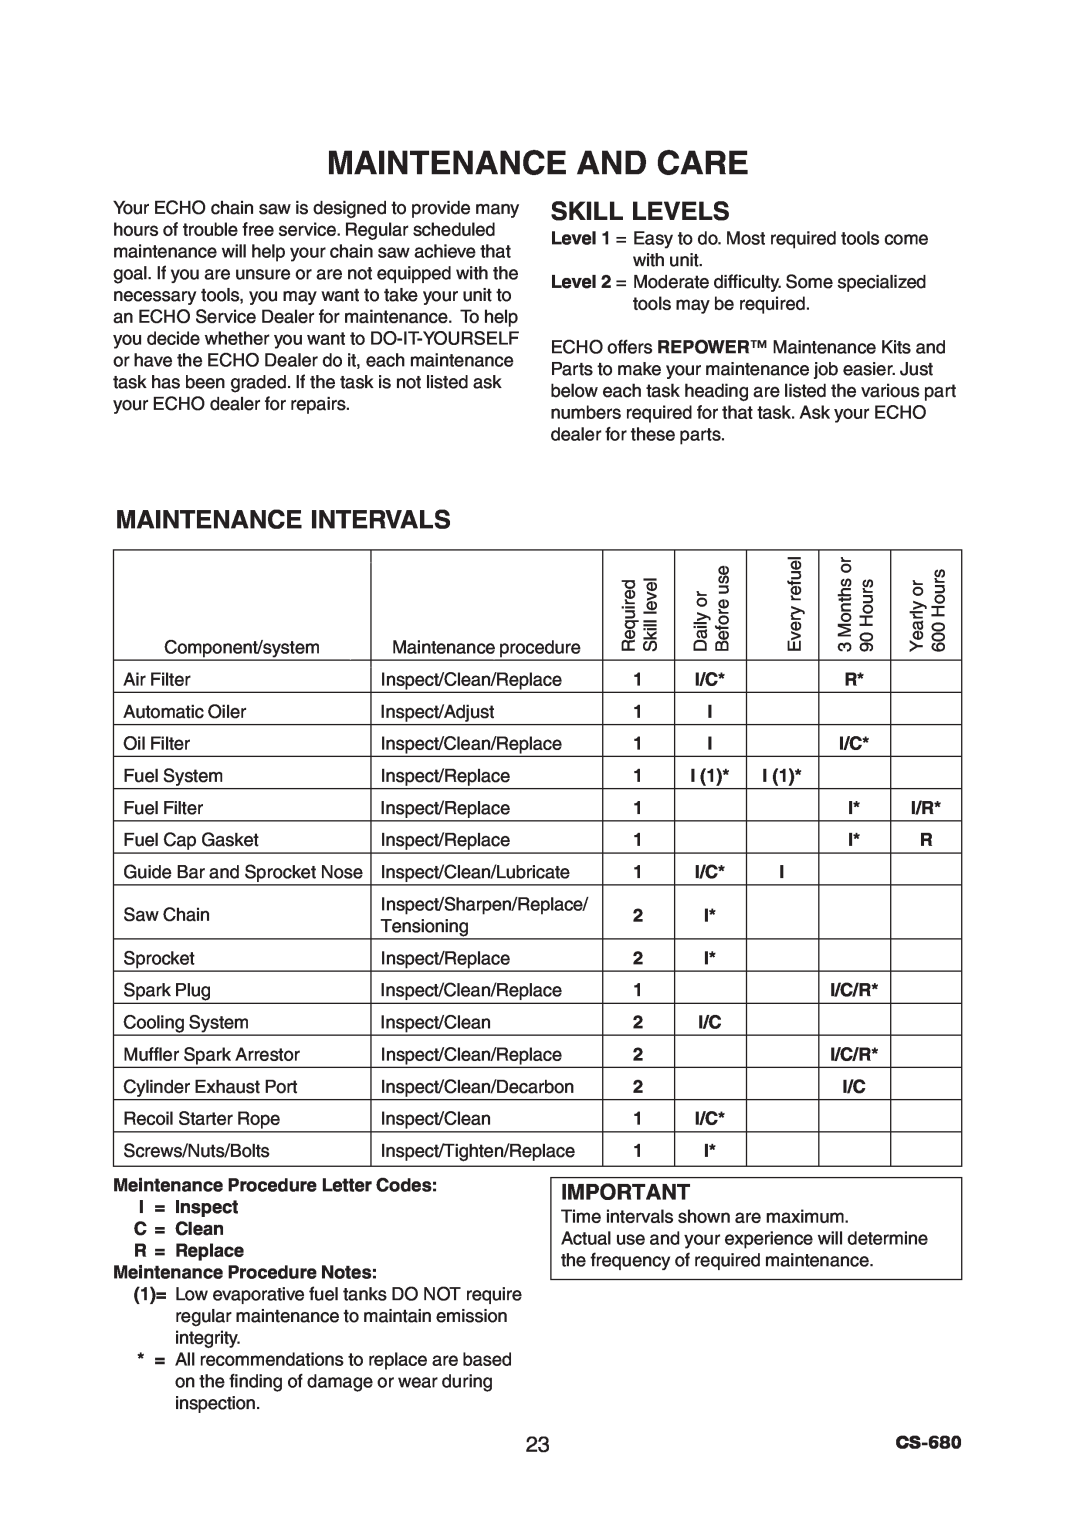 Echo CS-680 instruction manual Maintenance And Care, Skill Levels, Maintenance Intervals 